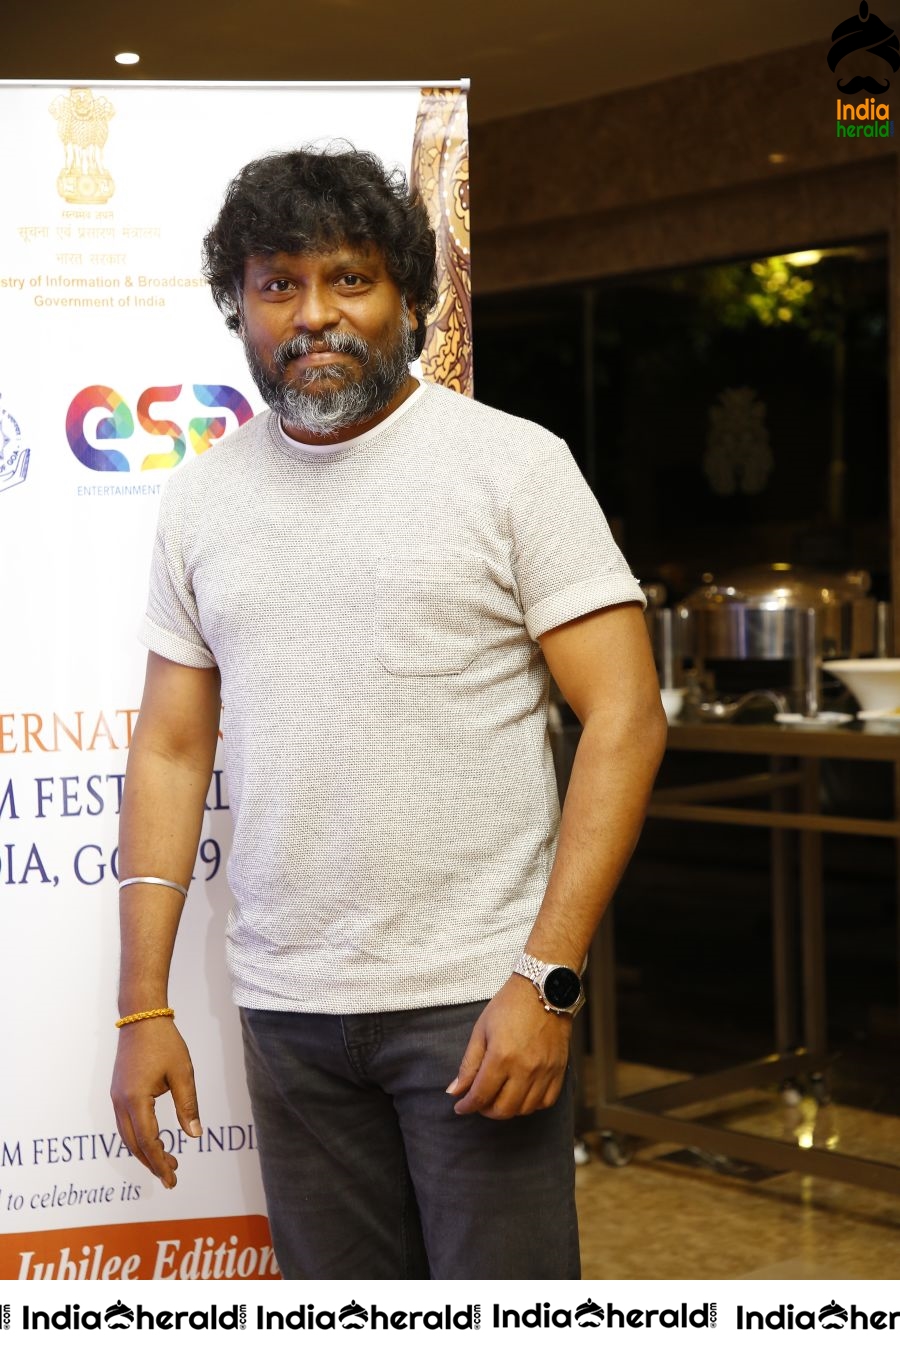 International Film Festival of India Event Photos at Chennai Set 2